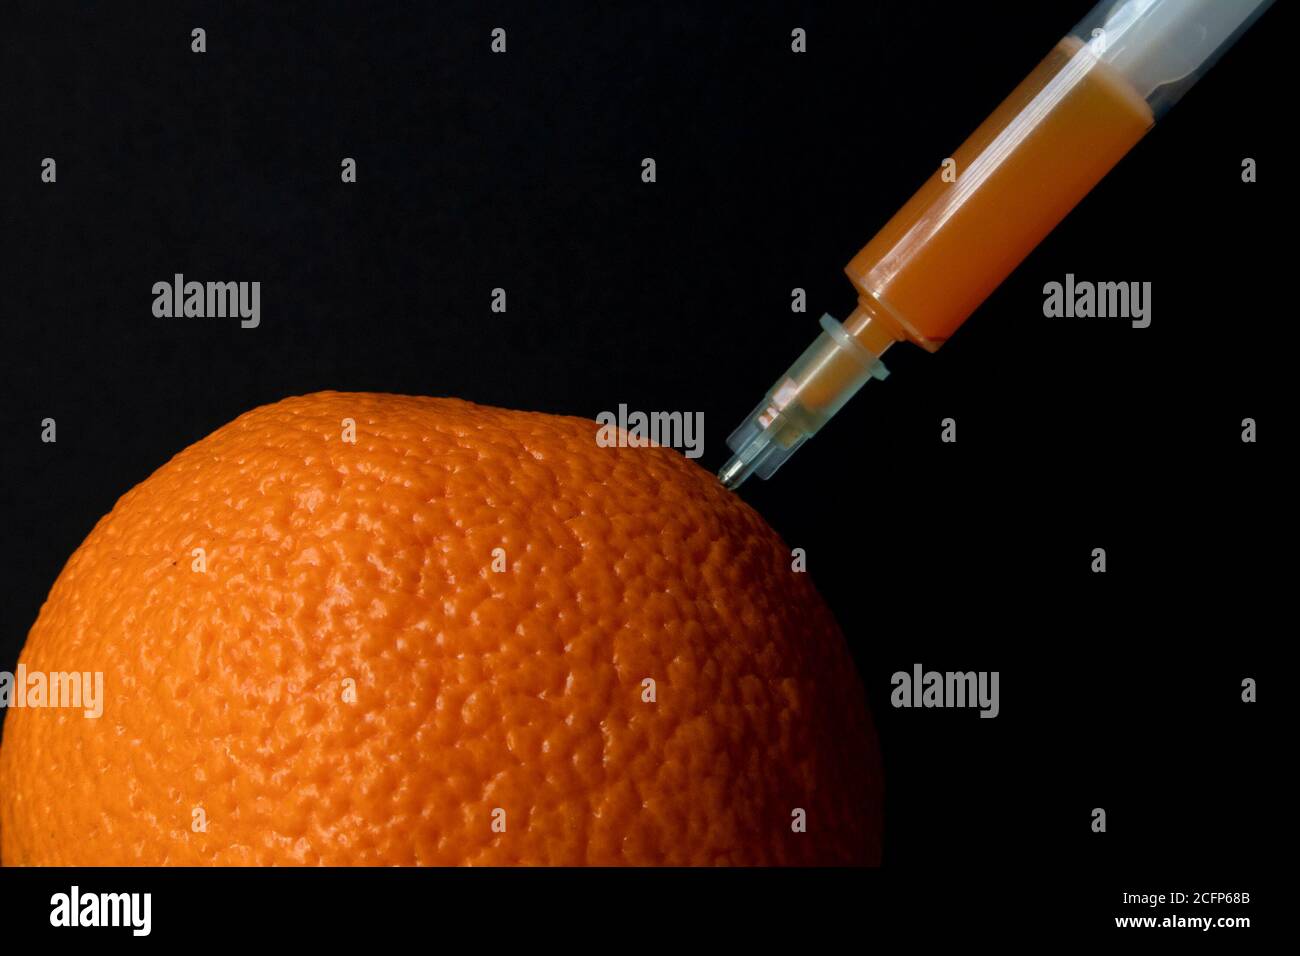 Bright orange on a wooden board and syringe inside it extracting orange liquid Stock Photo